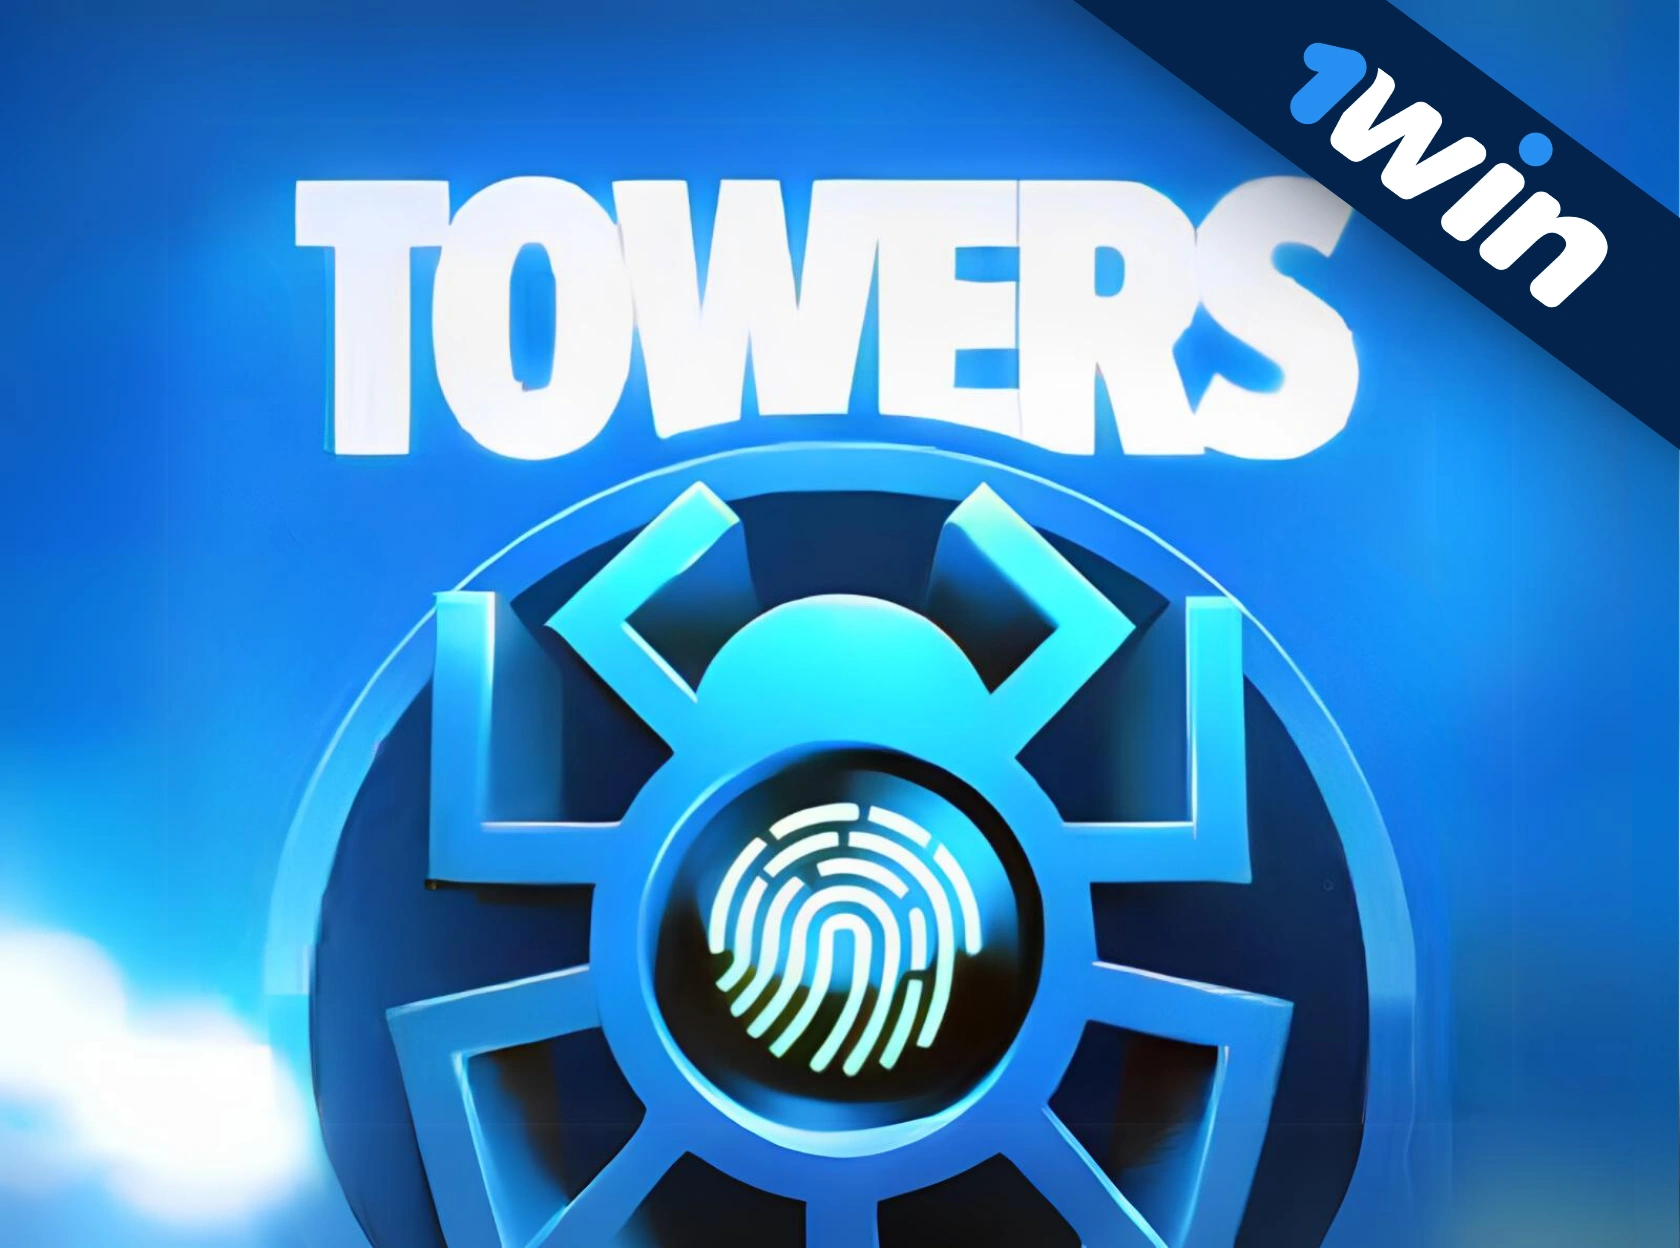 Towers 1win कैसीनो वेबसाइट पर